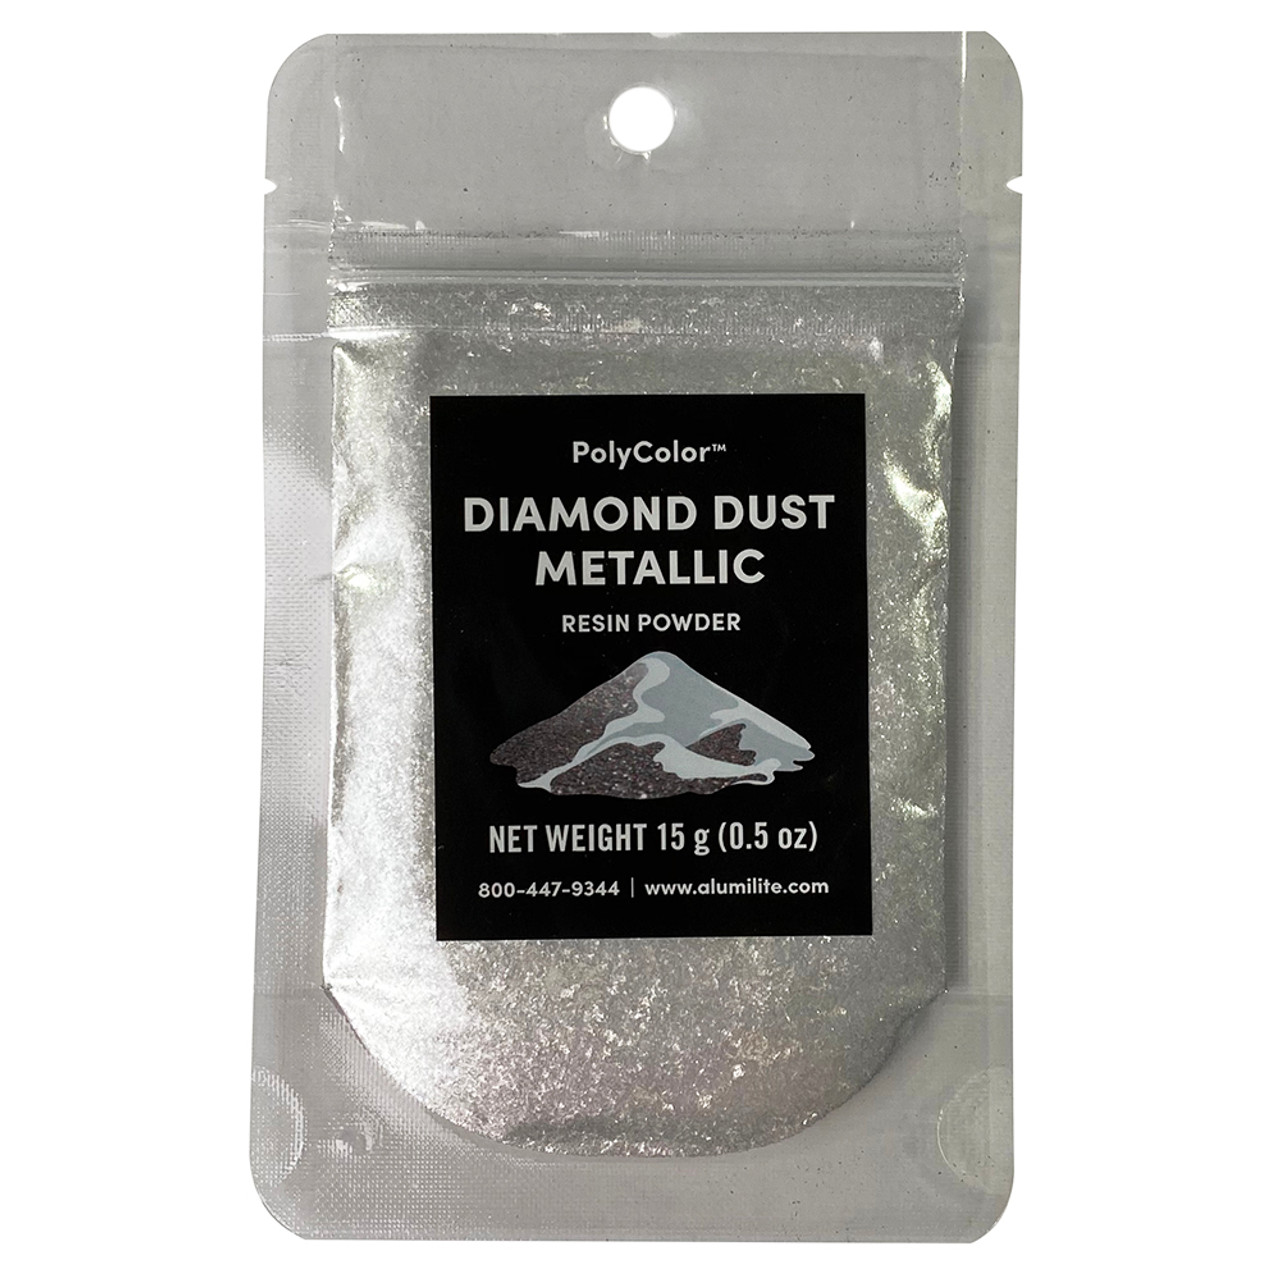 Polycolor Resin Powder Black Metallic 15 G Bag (0.5 oz) AL31005 – Creative  Wholesale